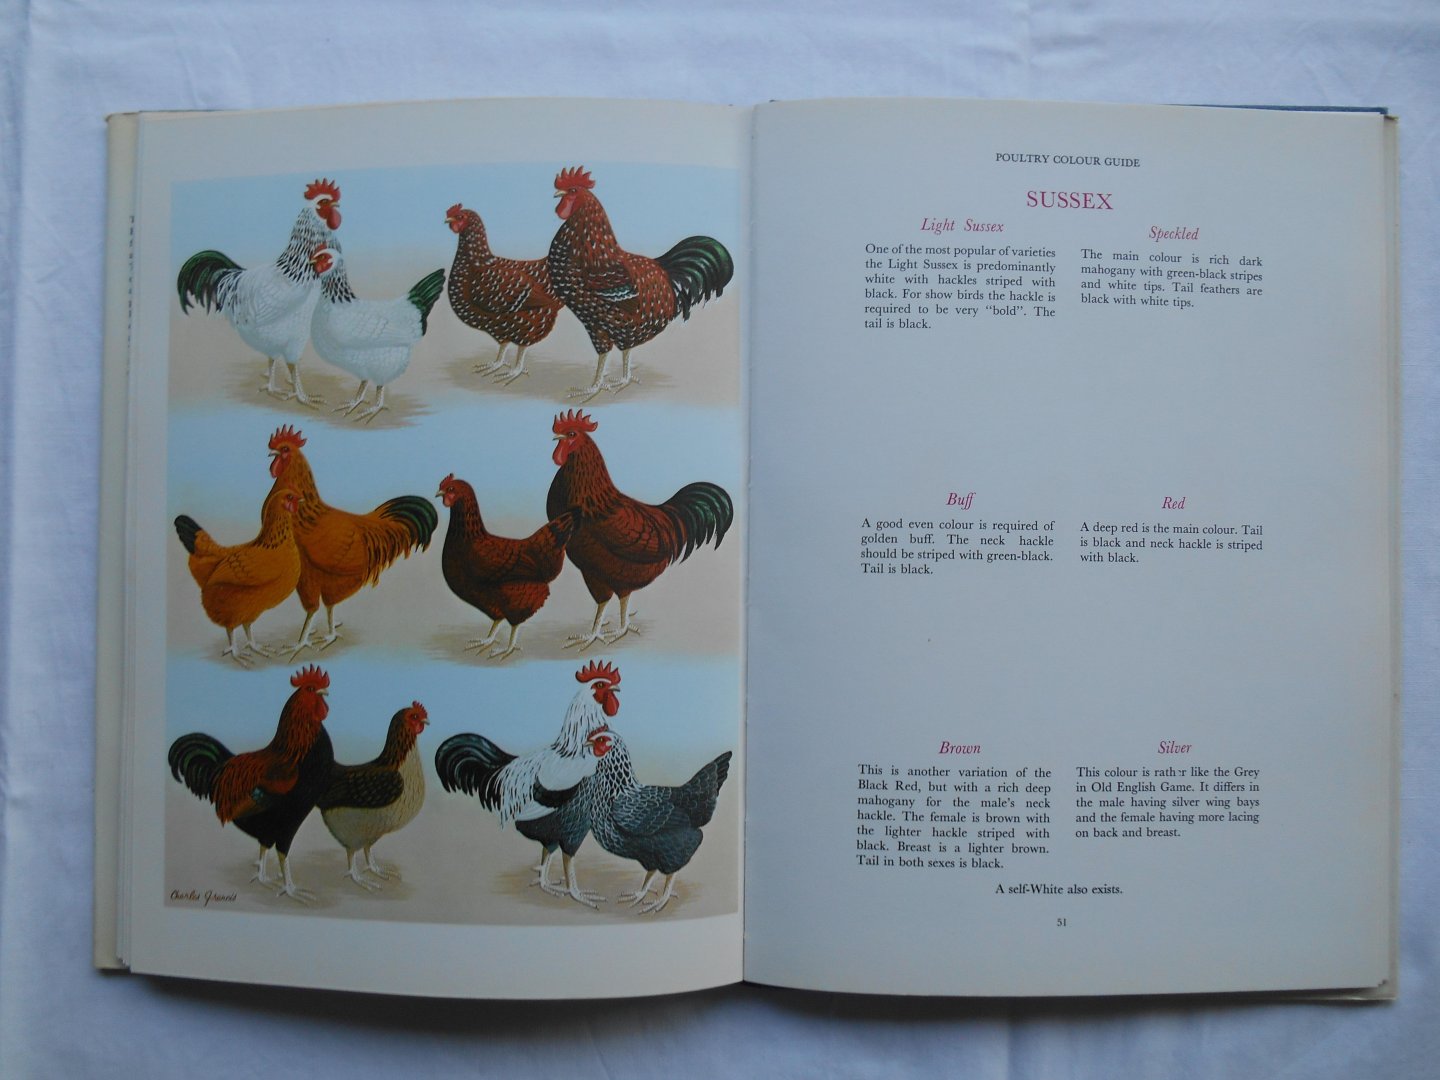 Batty, Dr. J. & Charles, Francis - Poultry Colour Guide.